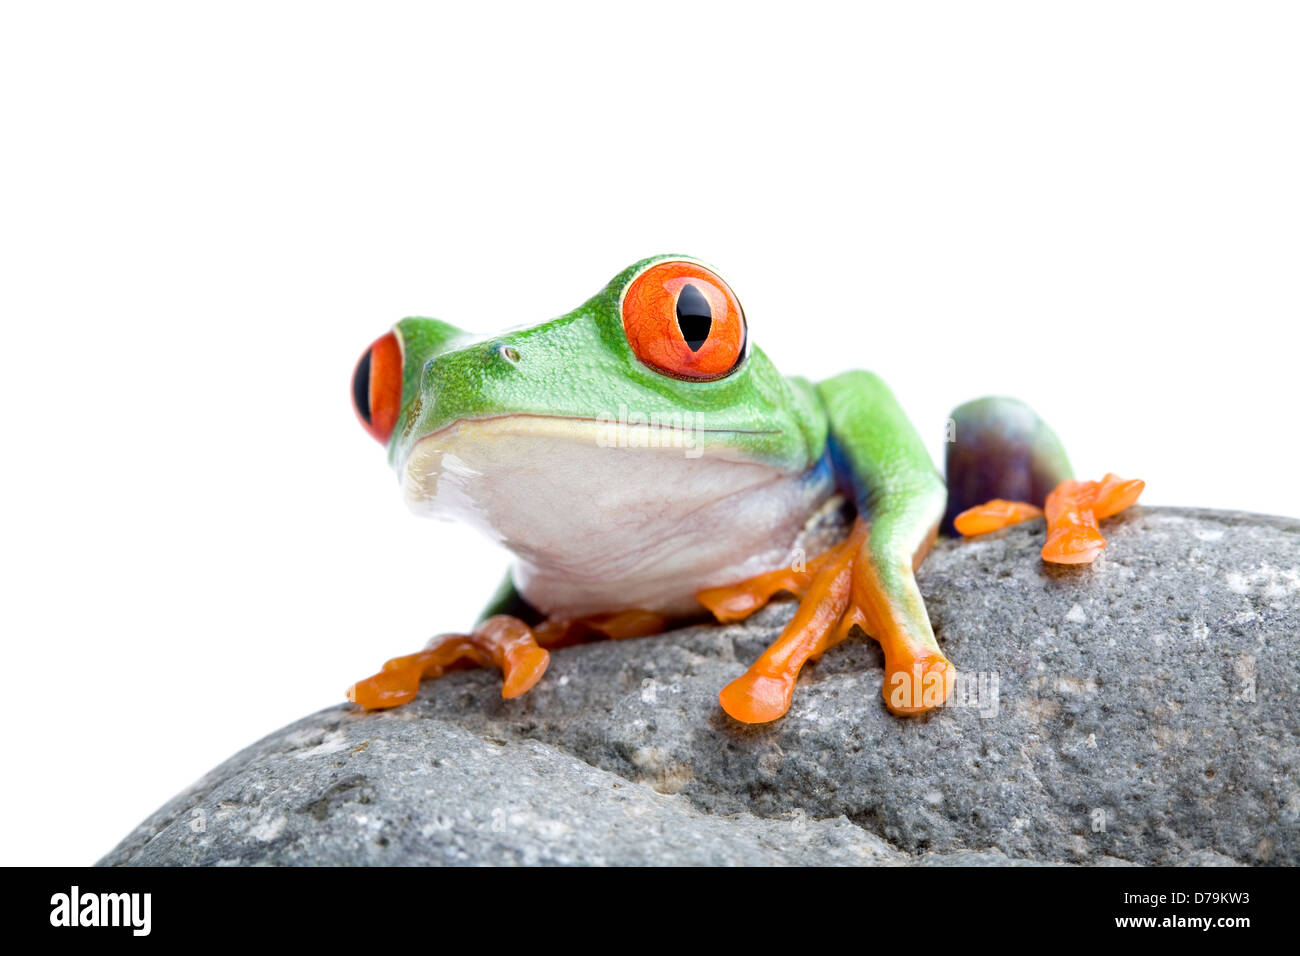 Red-eyed tree frog assis sur un rocher, isolé sur blanc Banque D'Images